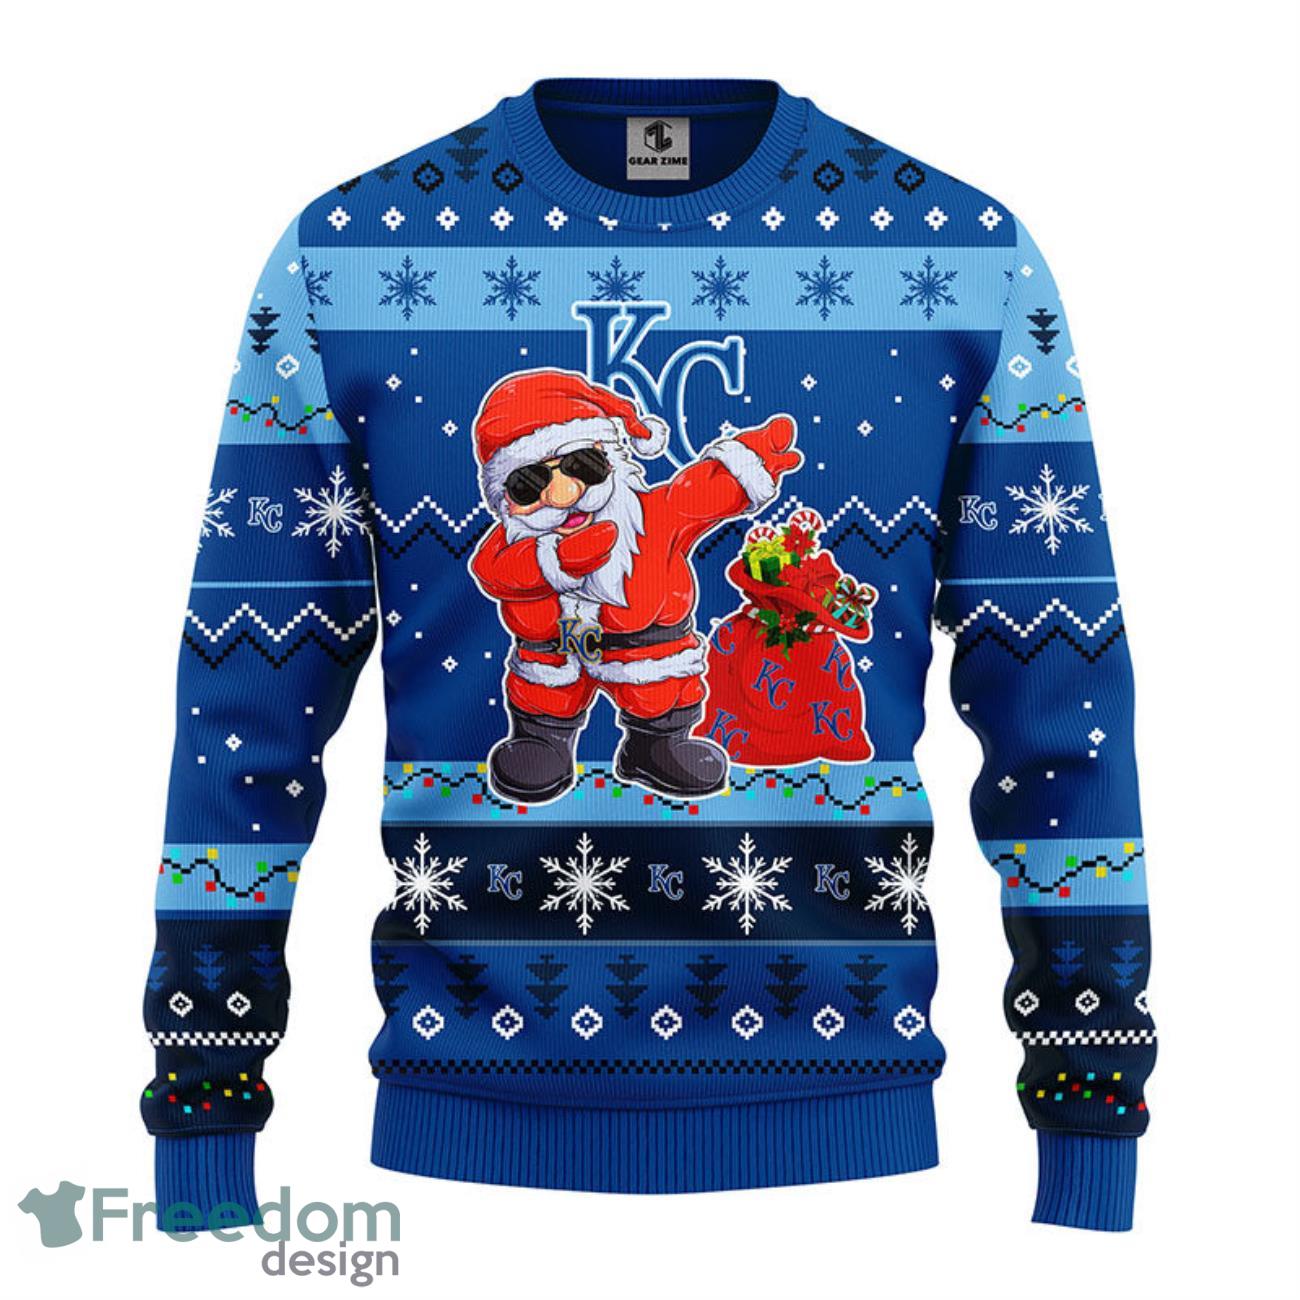 Kansas City Royals Grateful Dead Ugly Christmas Fleece Sweater -  Freedomdesign